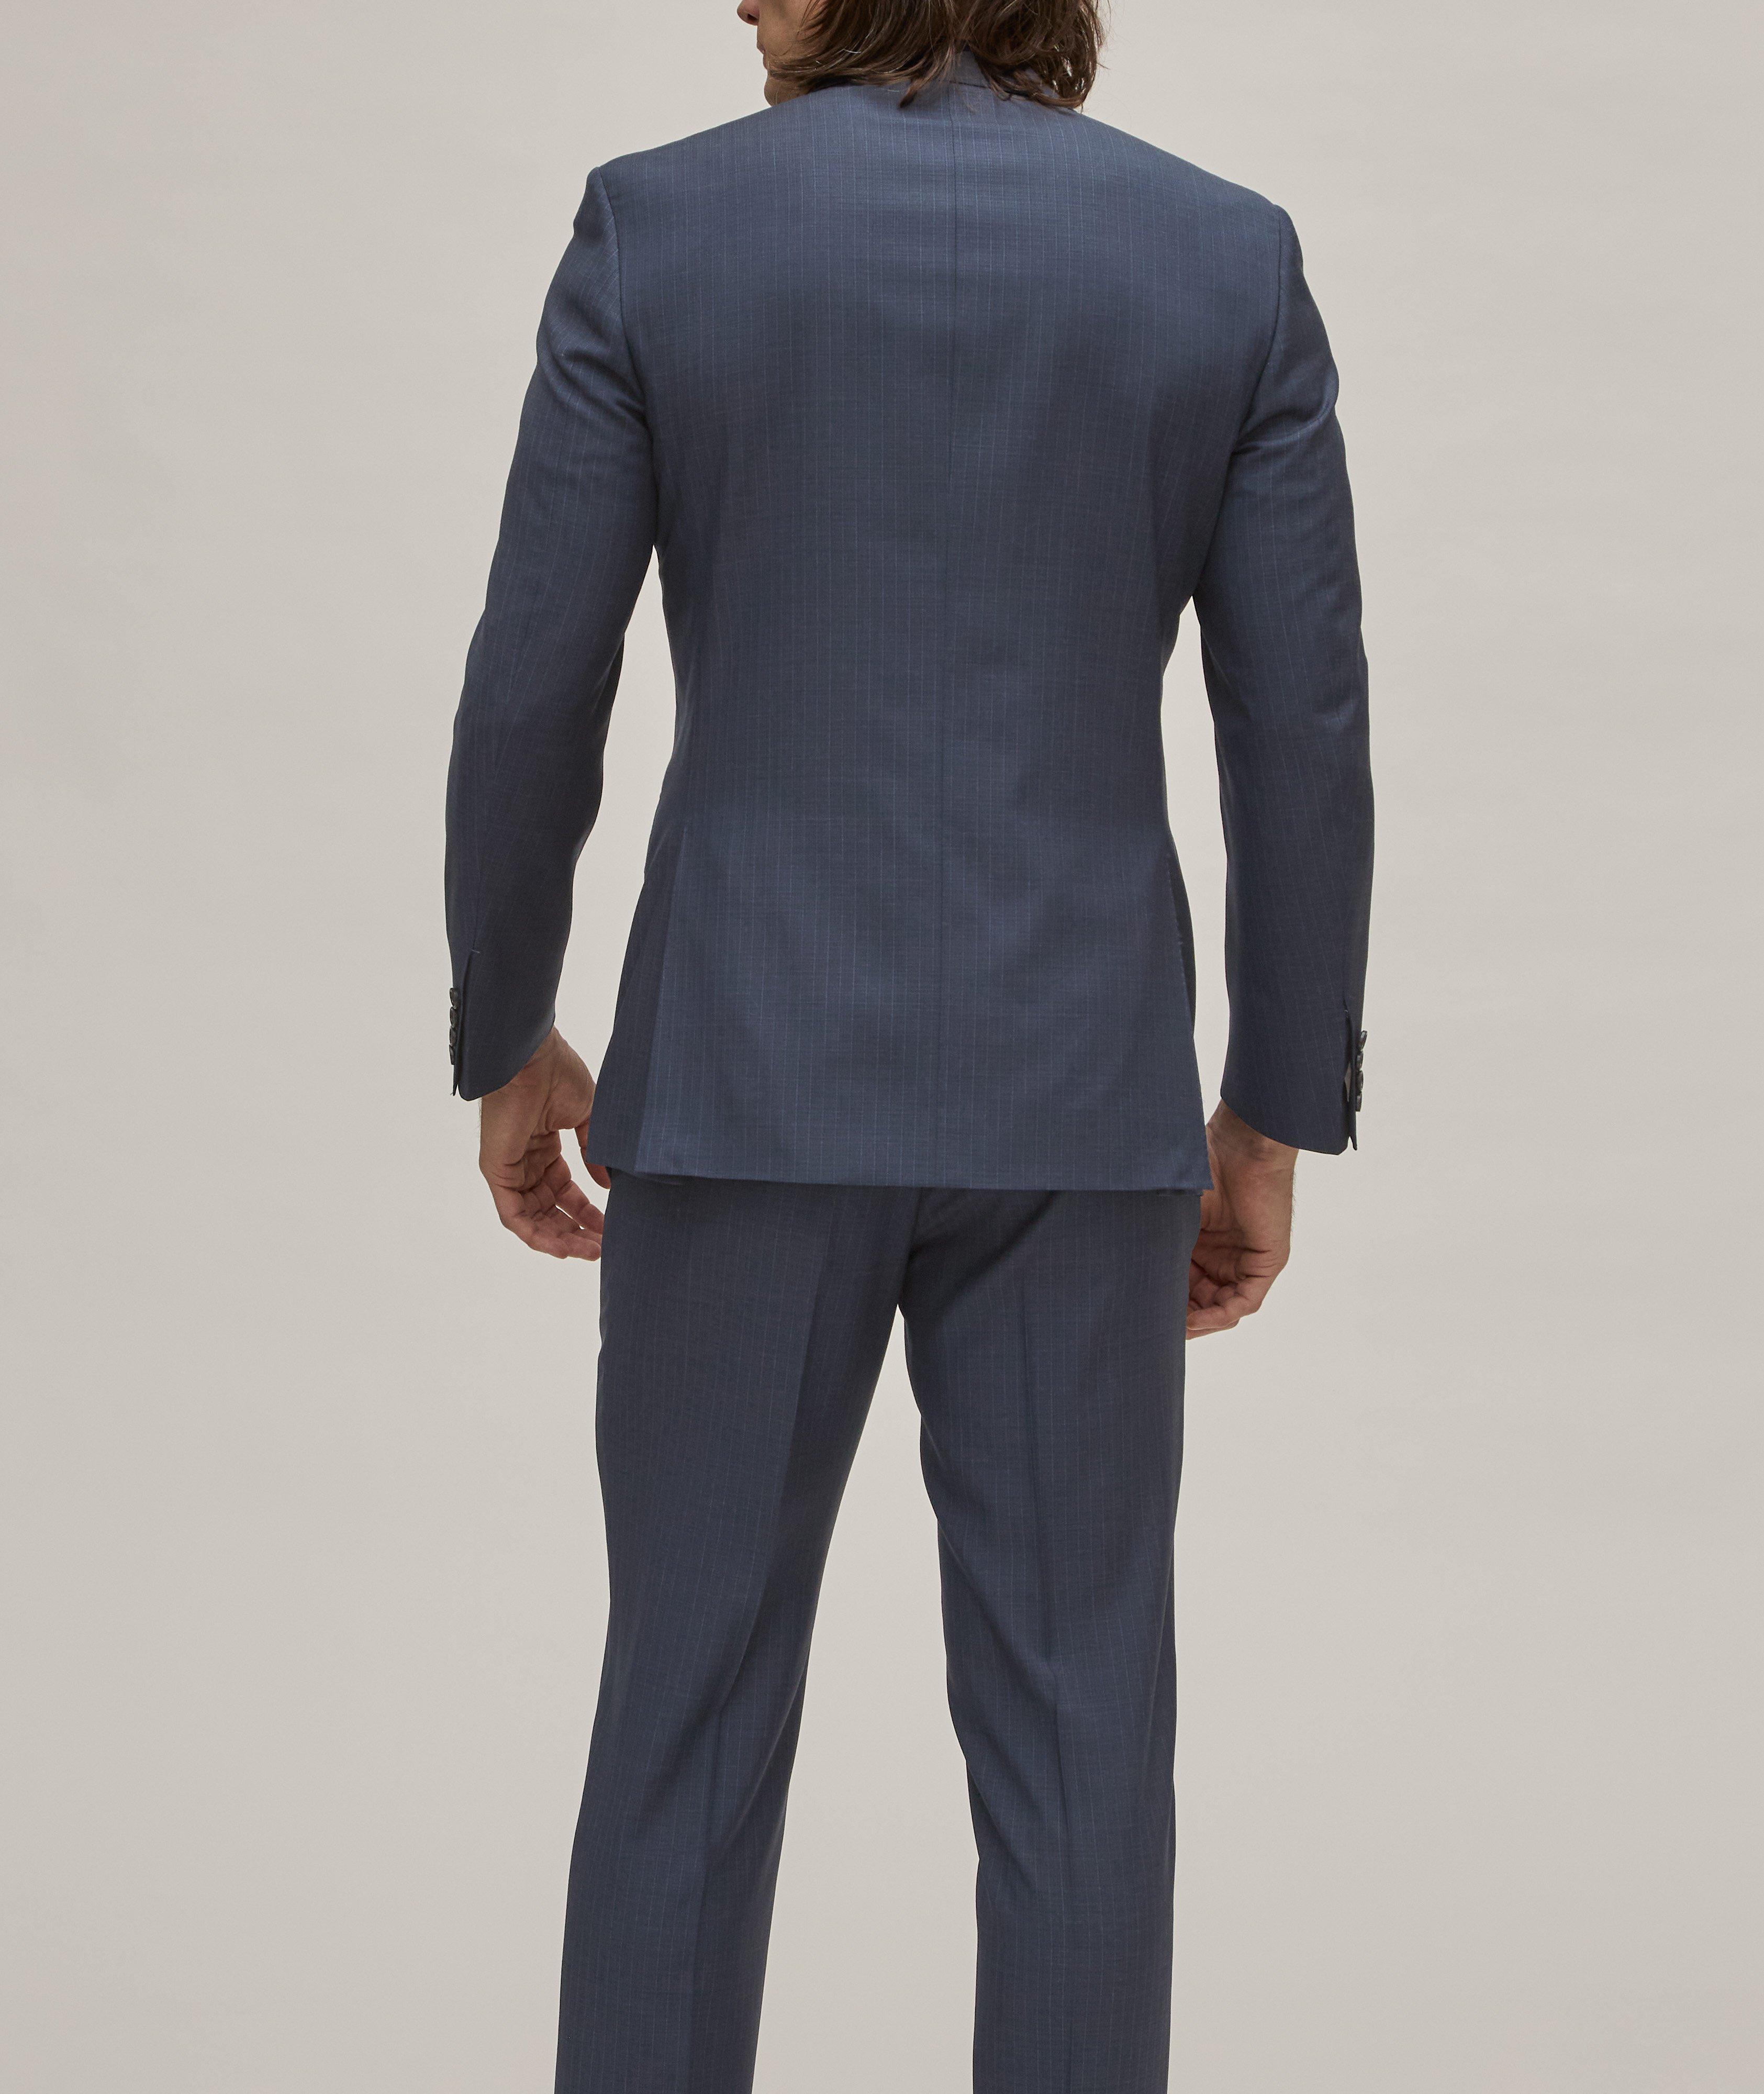 Tonal Pinstripe Wool Suit image 2